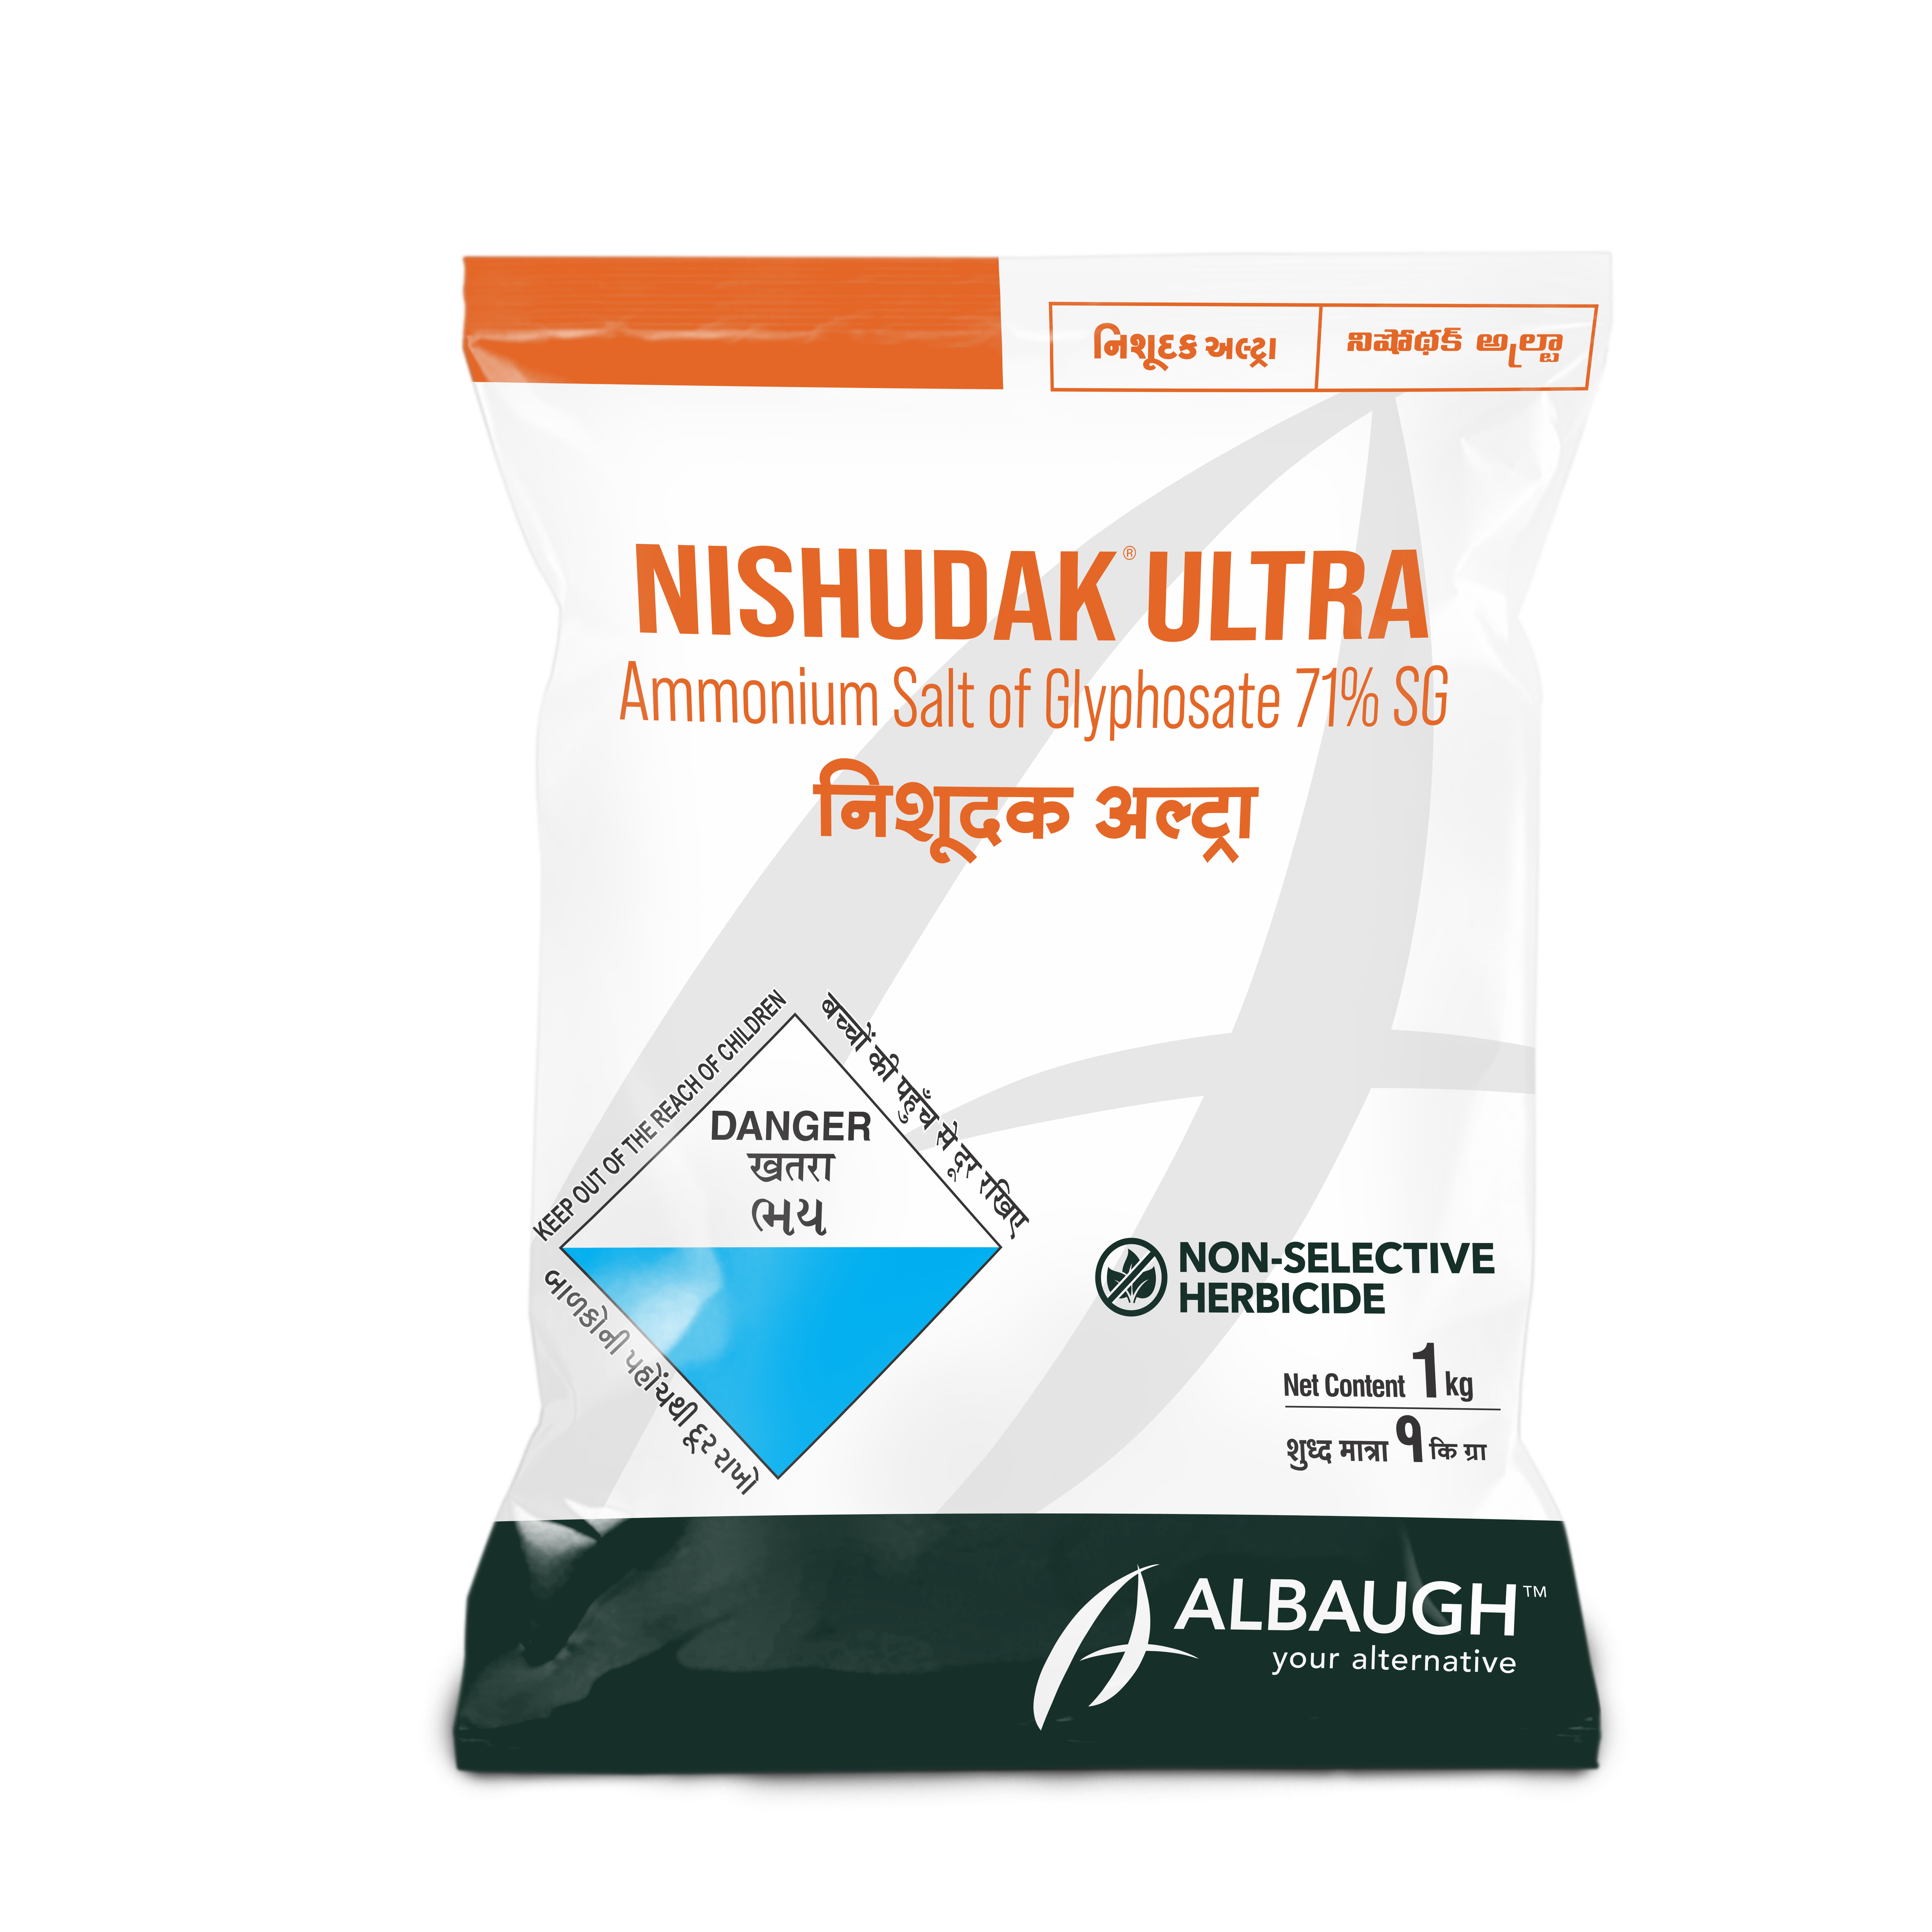 Nishudak Ultra:  Ammonium Salt of Glyphosate 71% SG